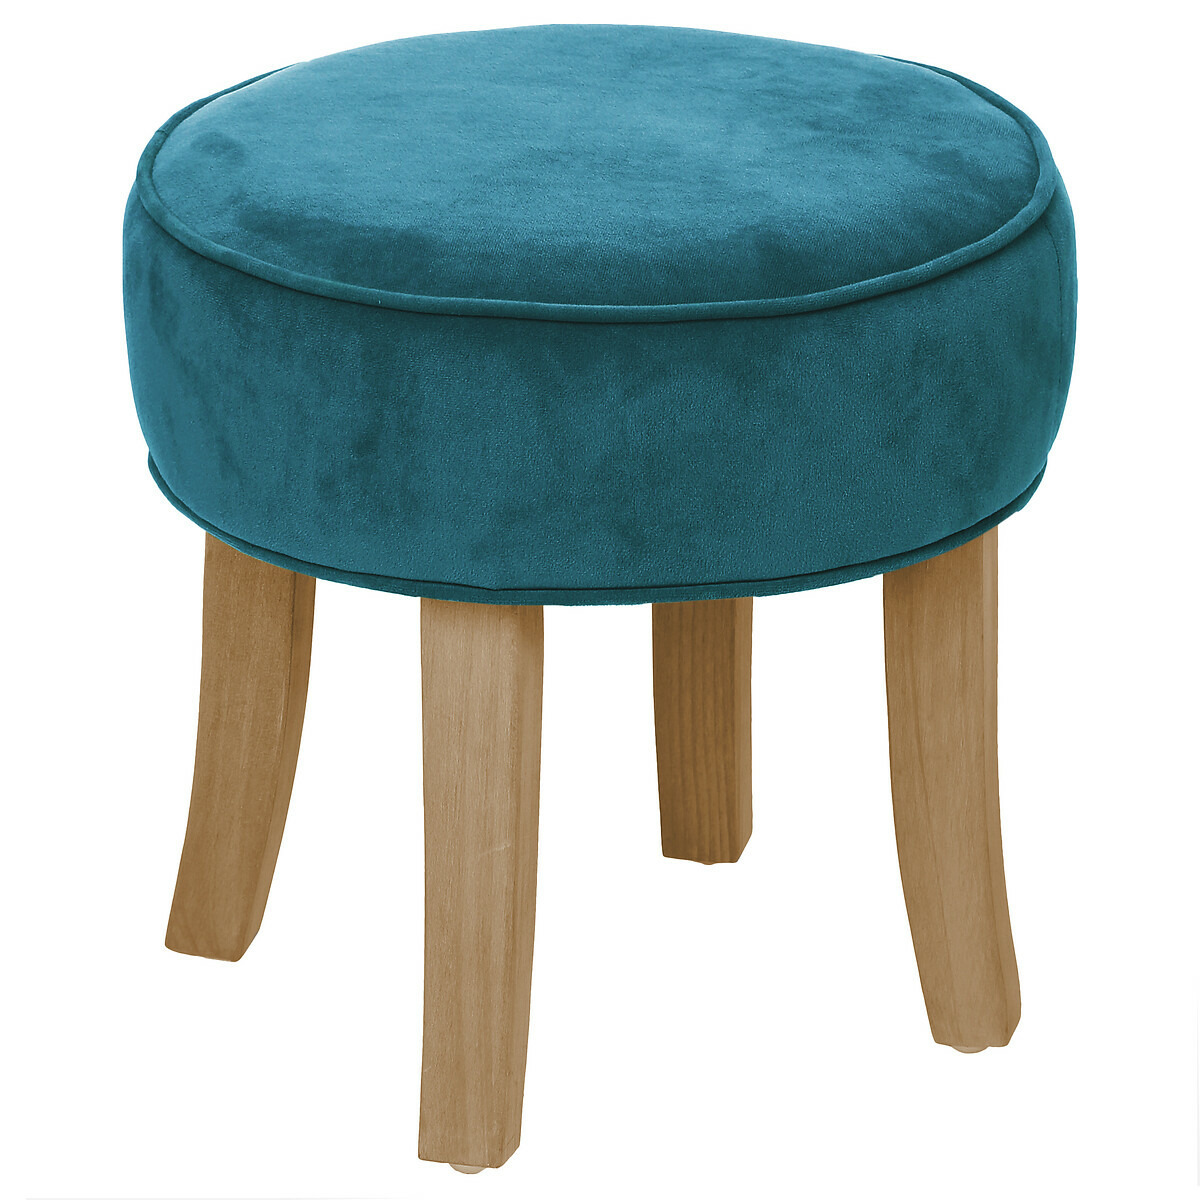 Zit krukje-bijzet stoel hout-stof blauw fluweel D35 x H40 cm